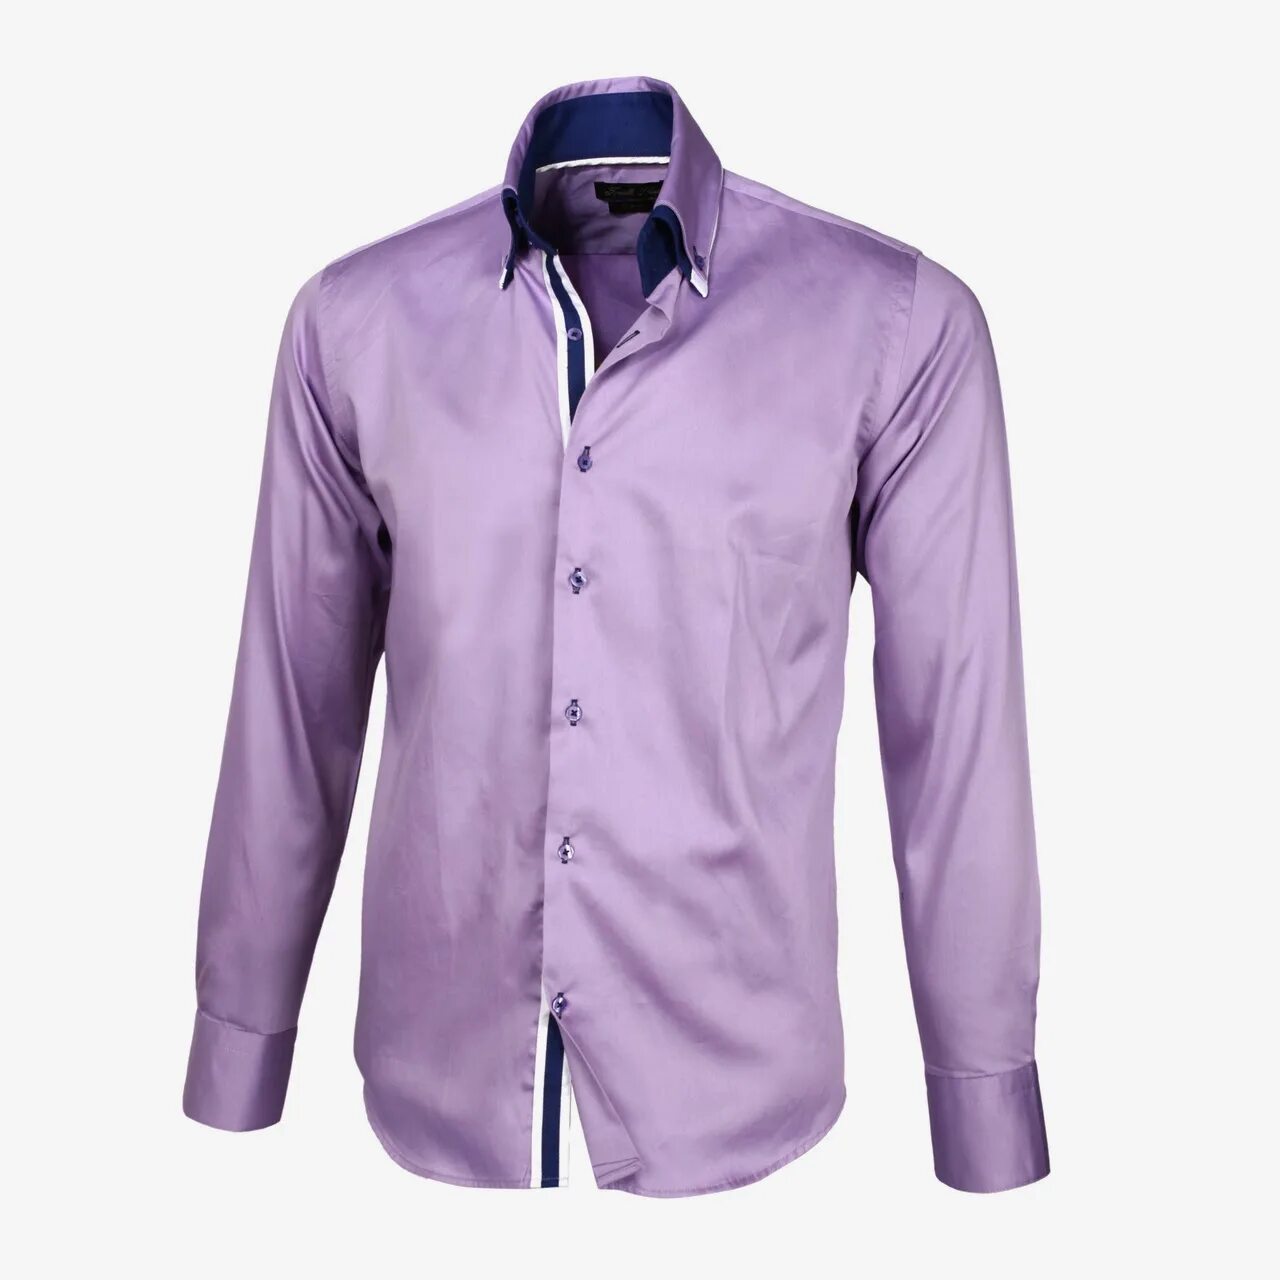 Валберис мужские рубашки. Mantaray Purple рубашка мужская. Рубашка Lee l66ndn52. Красивые рубашки для мужчин.